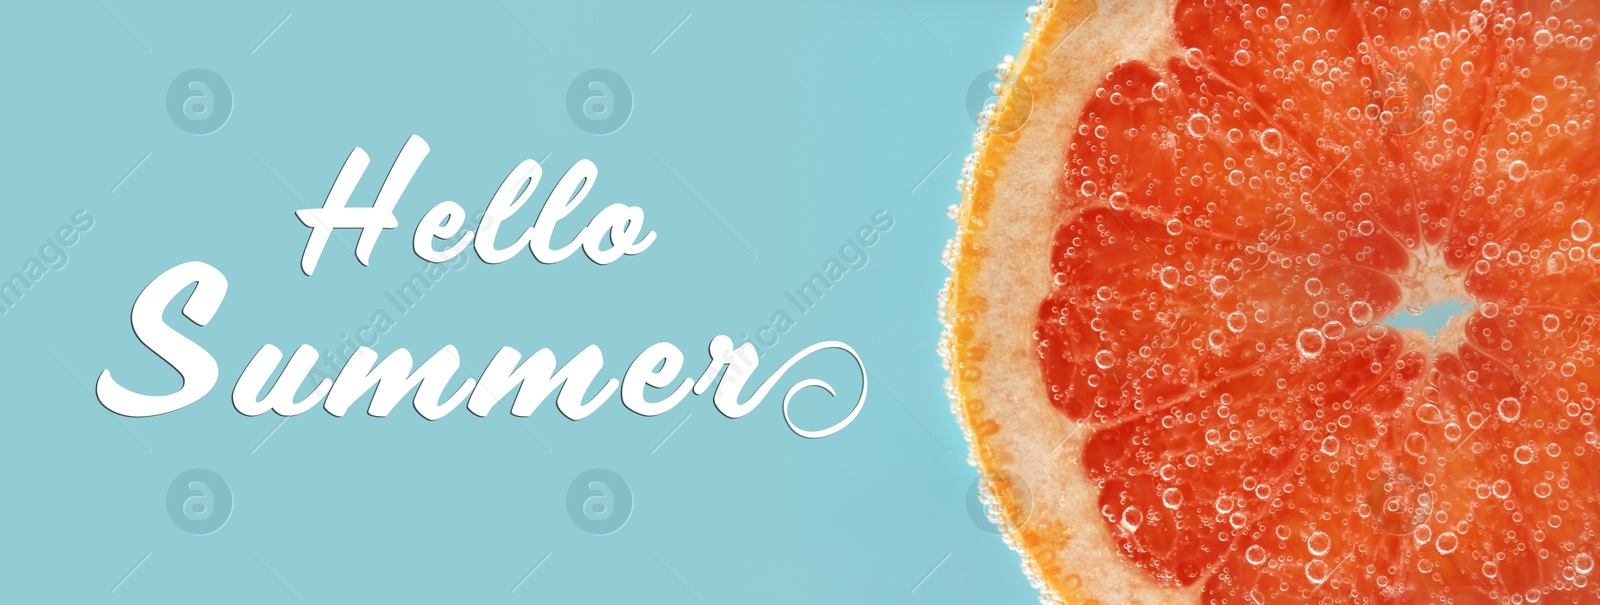 Image of Hello Summer. Slice of grapefruit in sparkling water on light blue background, banner design.